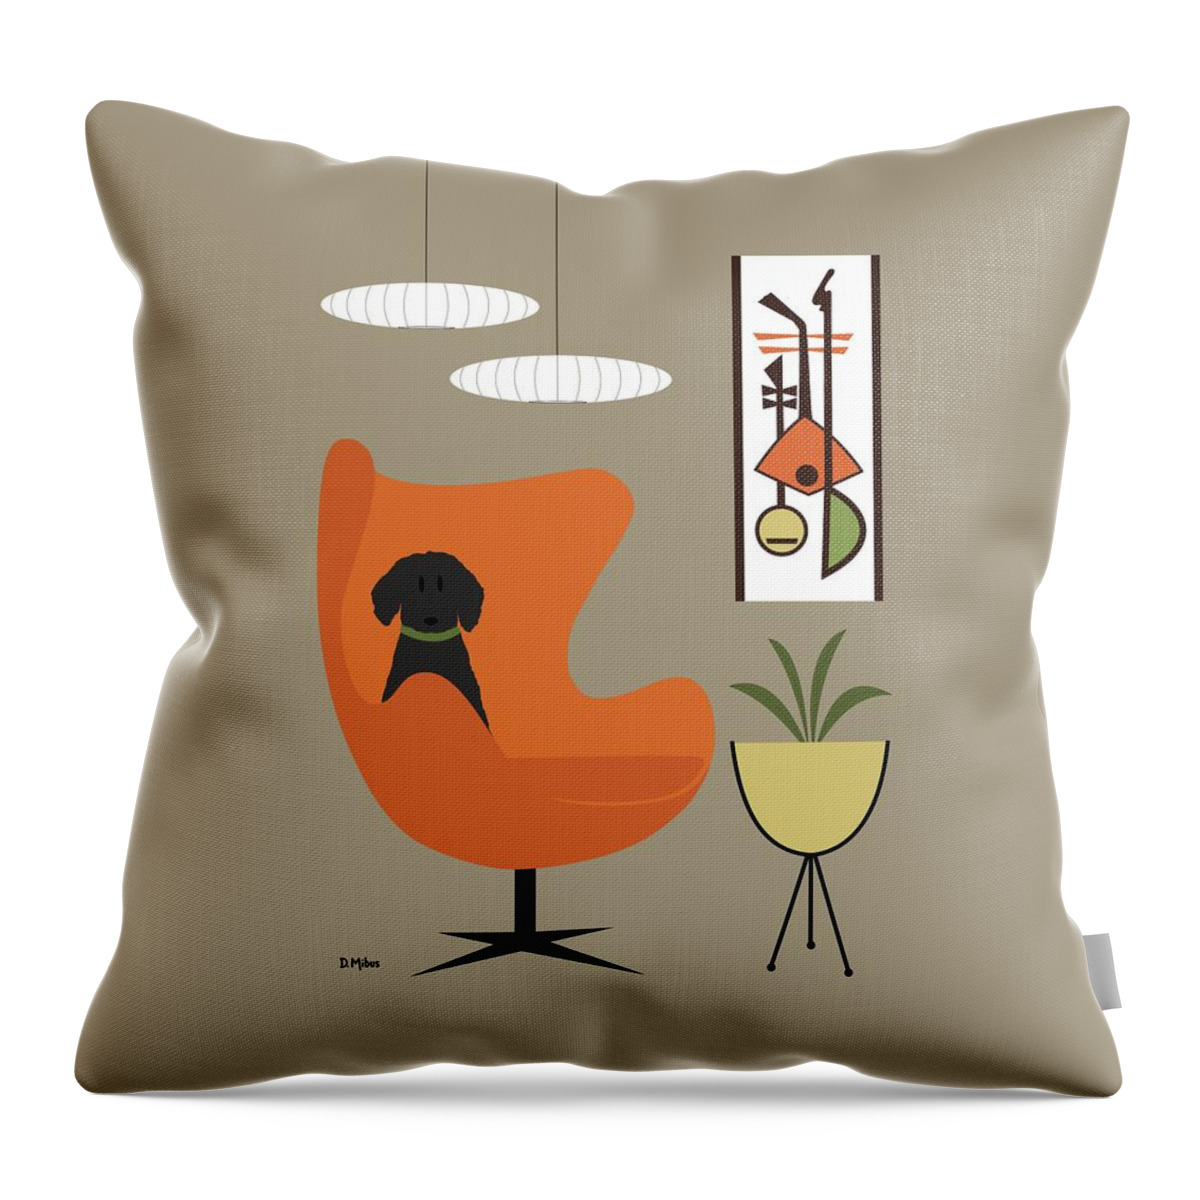 Mid Century Modern Throw Pillow featuring the digital art Black Dog in Orange Mid Century Chair by Donna Mibus